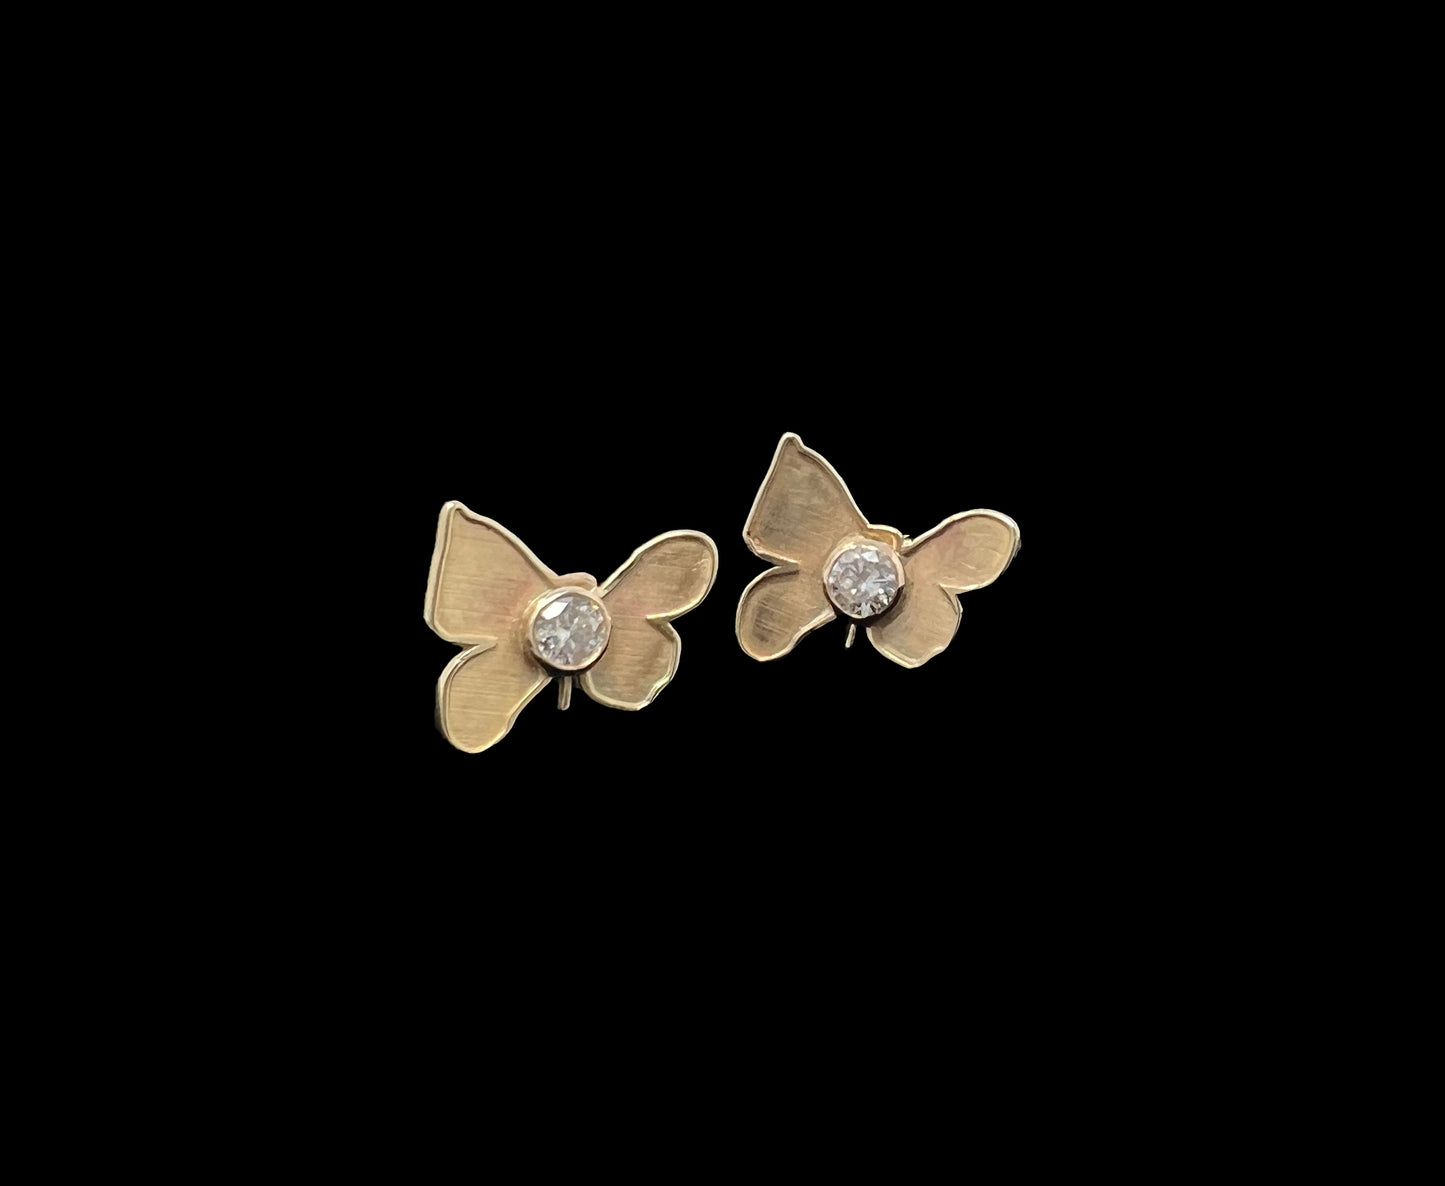 Make My Heart Flutter - Solid 10k Gold with White Diamonds Butterfly Earrings